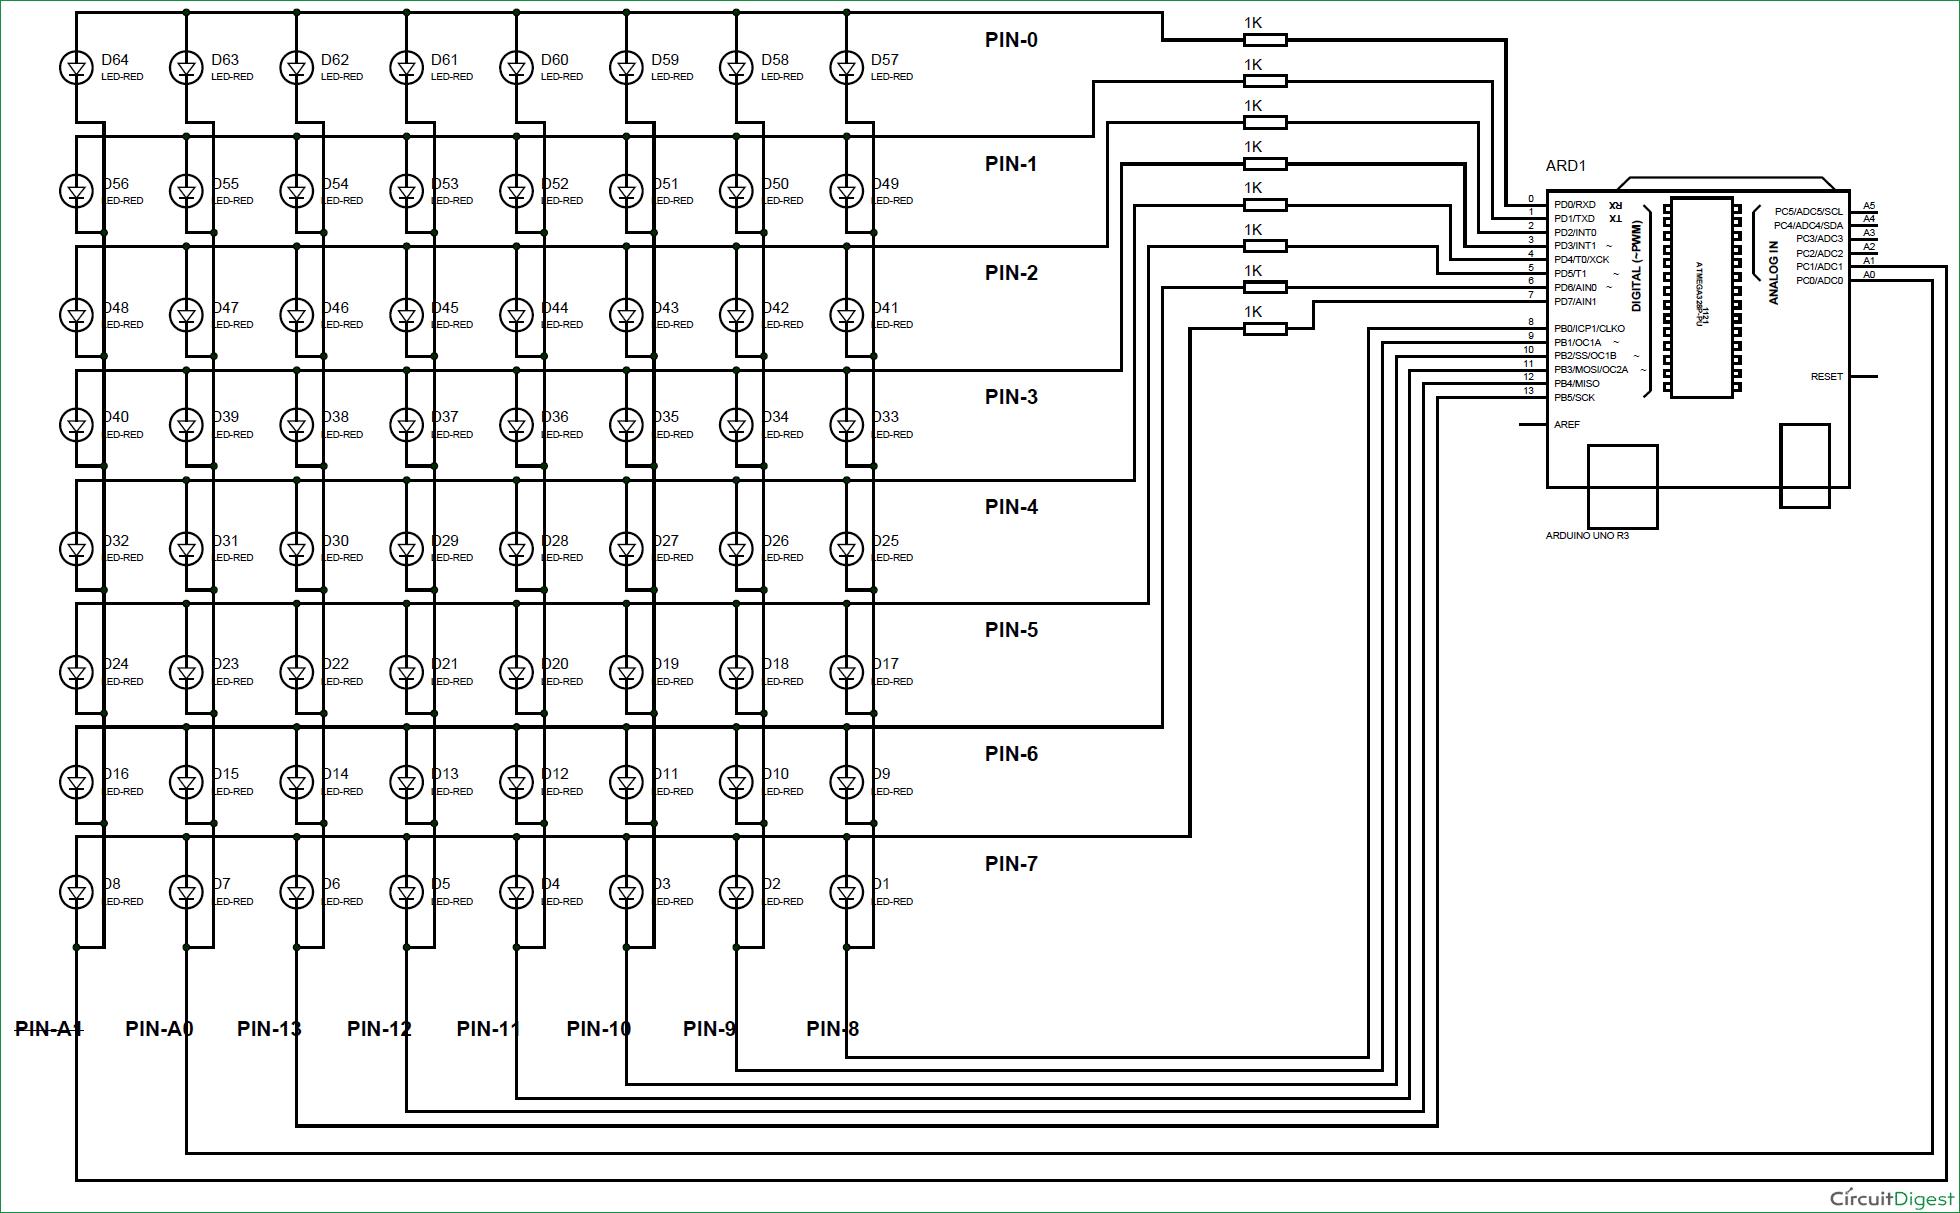 Scrolling Text Display on 8x8 LED Matrix using Arduino